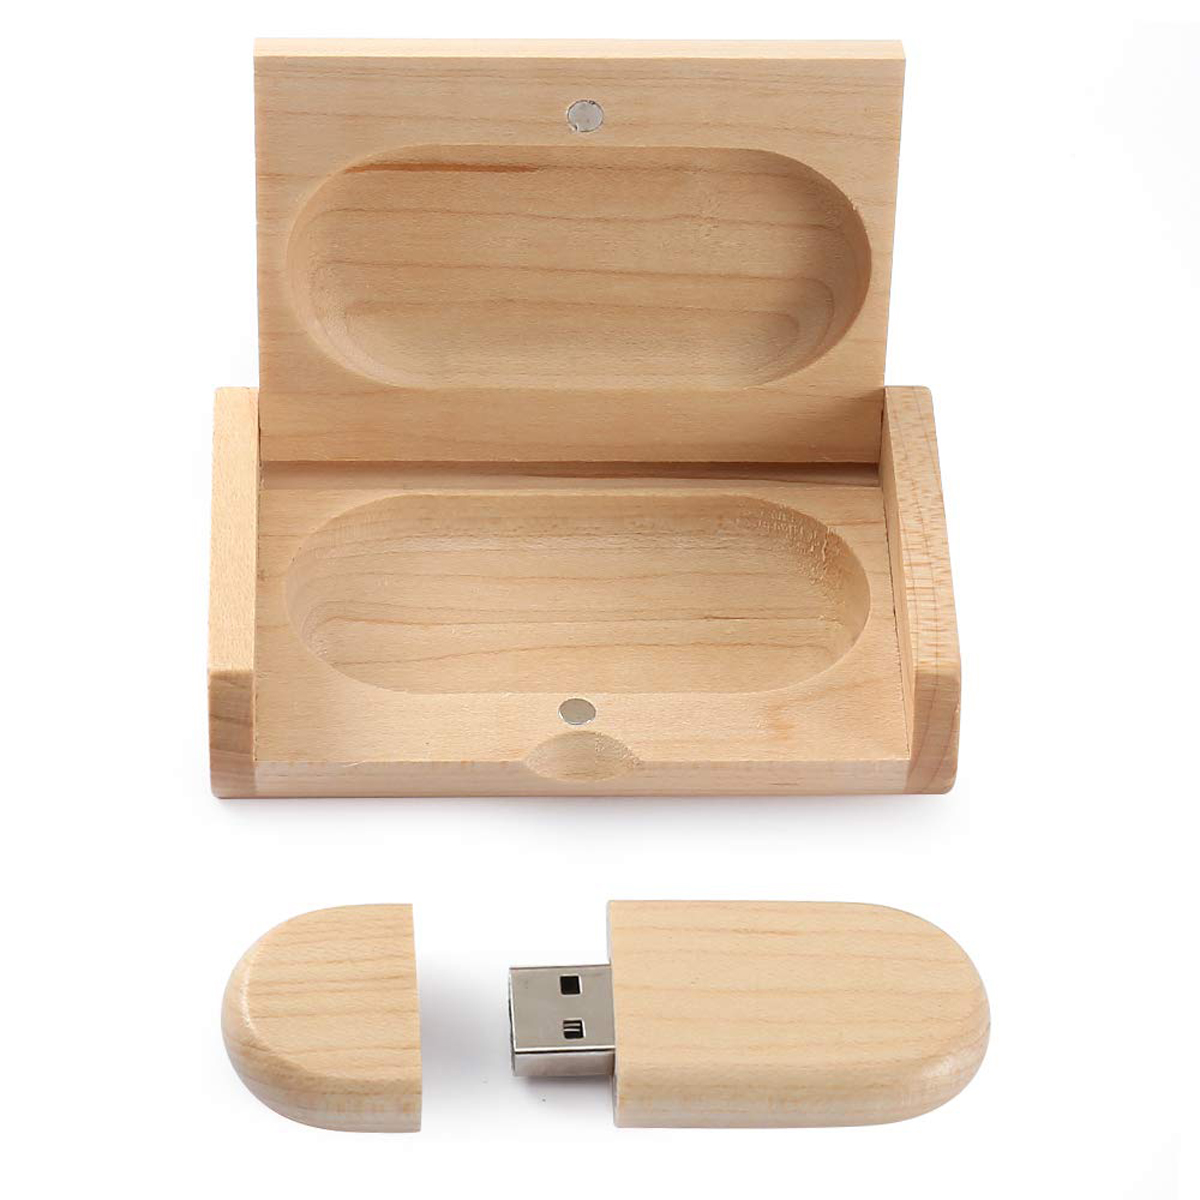 GL-MEZ1077 Wooden USB 2.0 Flash Drive 8GB with Gift Box